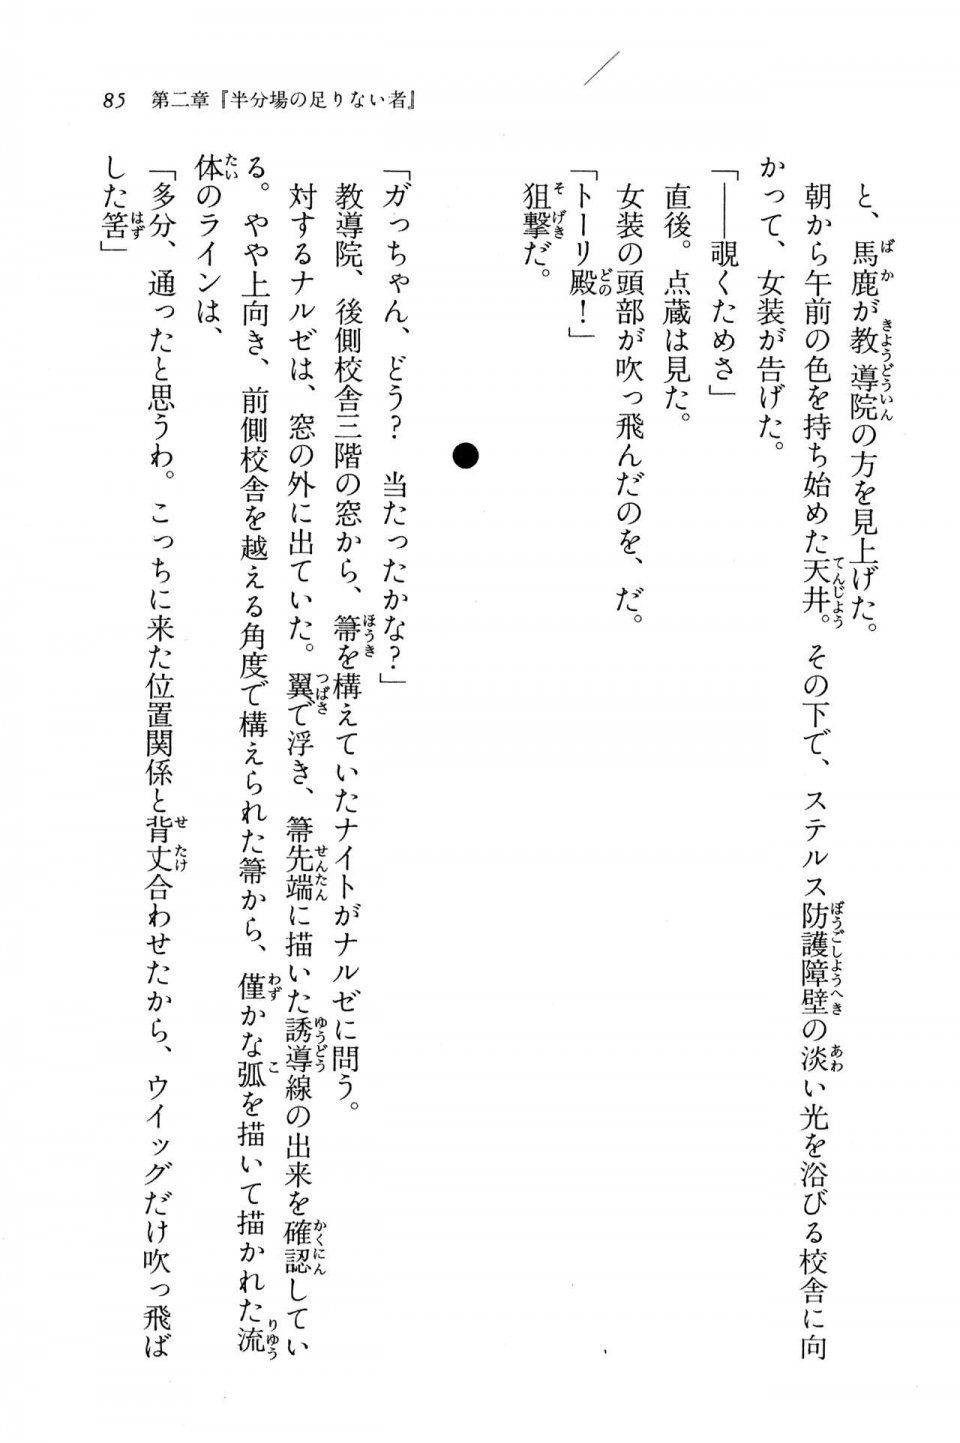 Kyoukai Senjou no Horizon BD Special Mininovel Vol 5(3A) - Photo #89